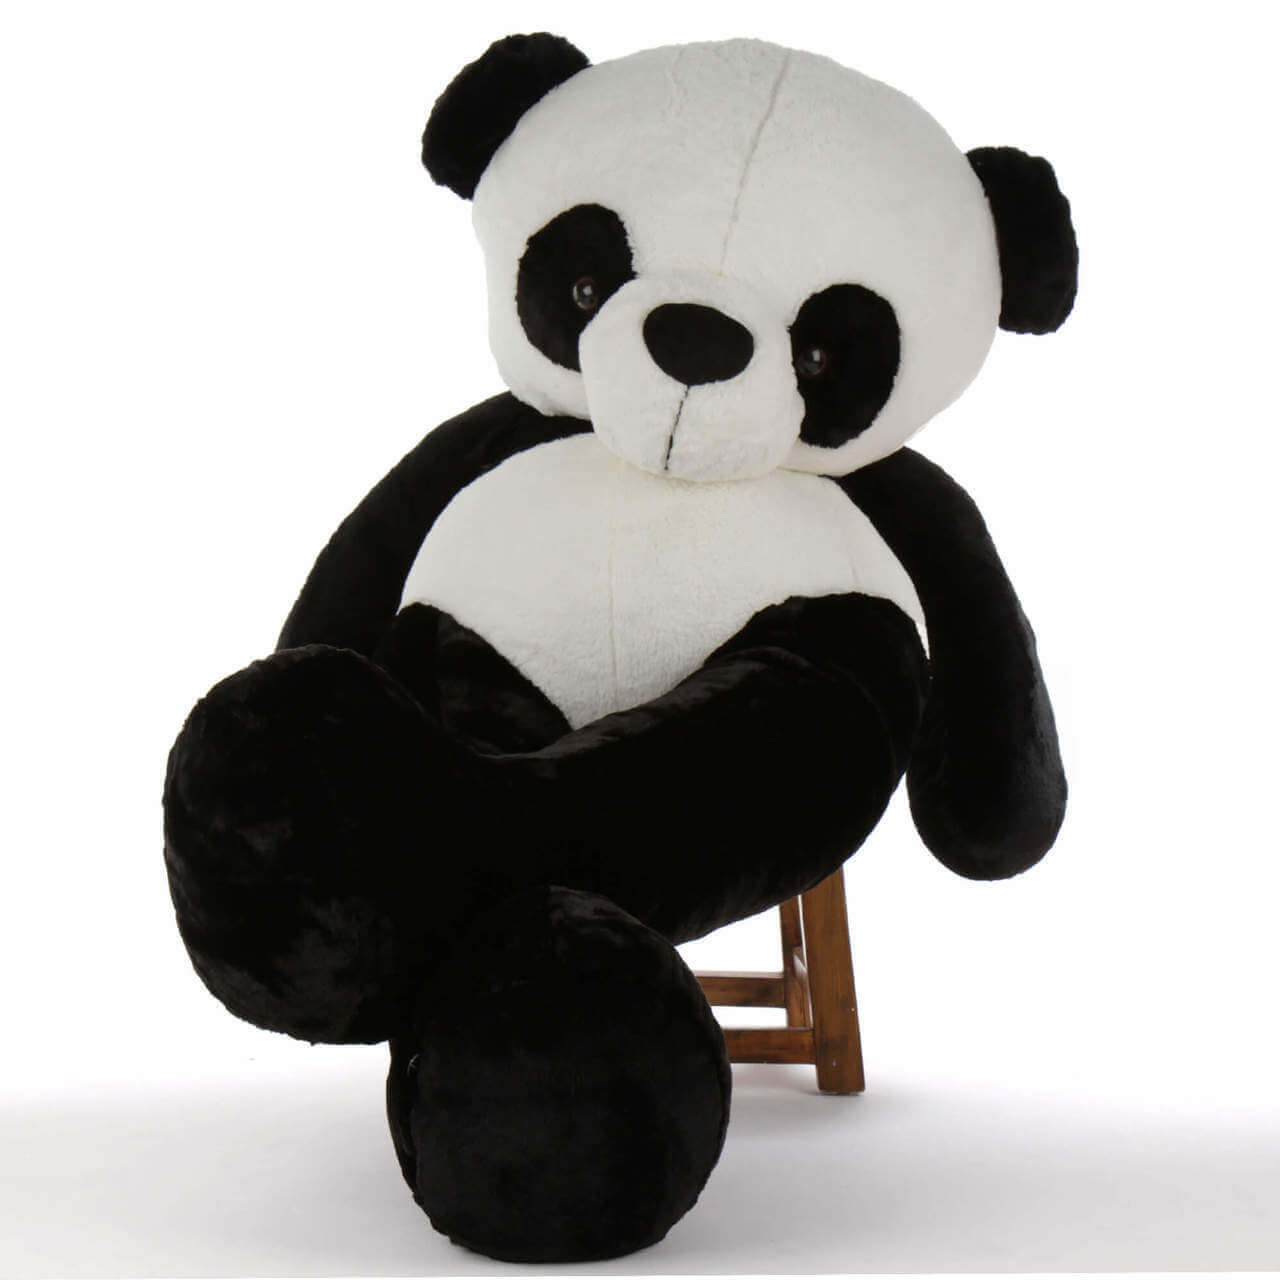 6 ft Biggest Life Size Panda Teddy Bear Rocky Xiong